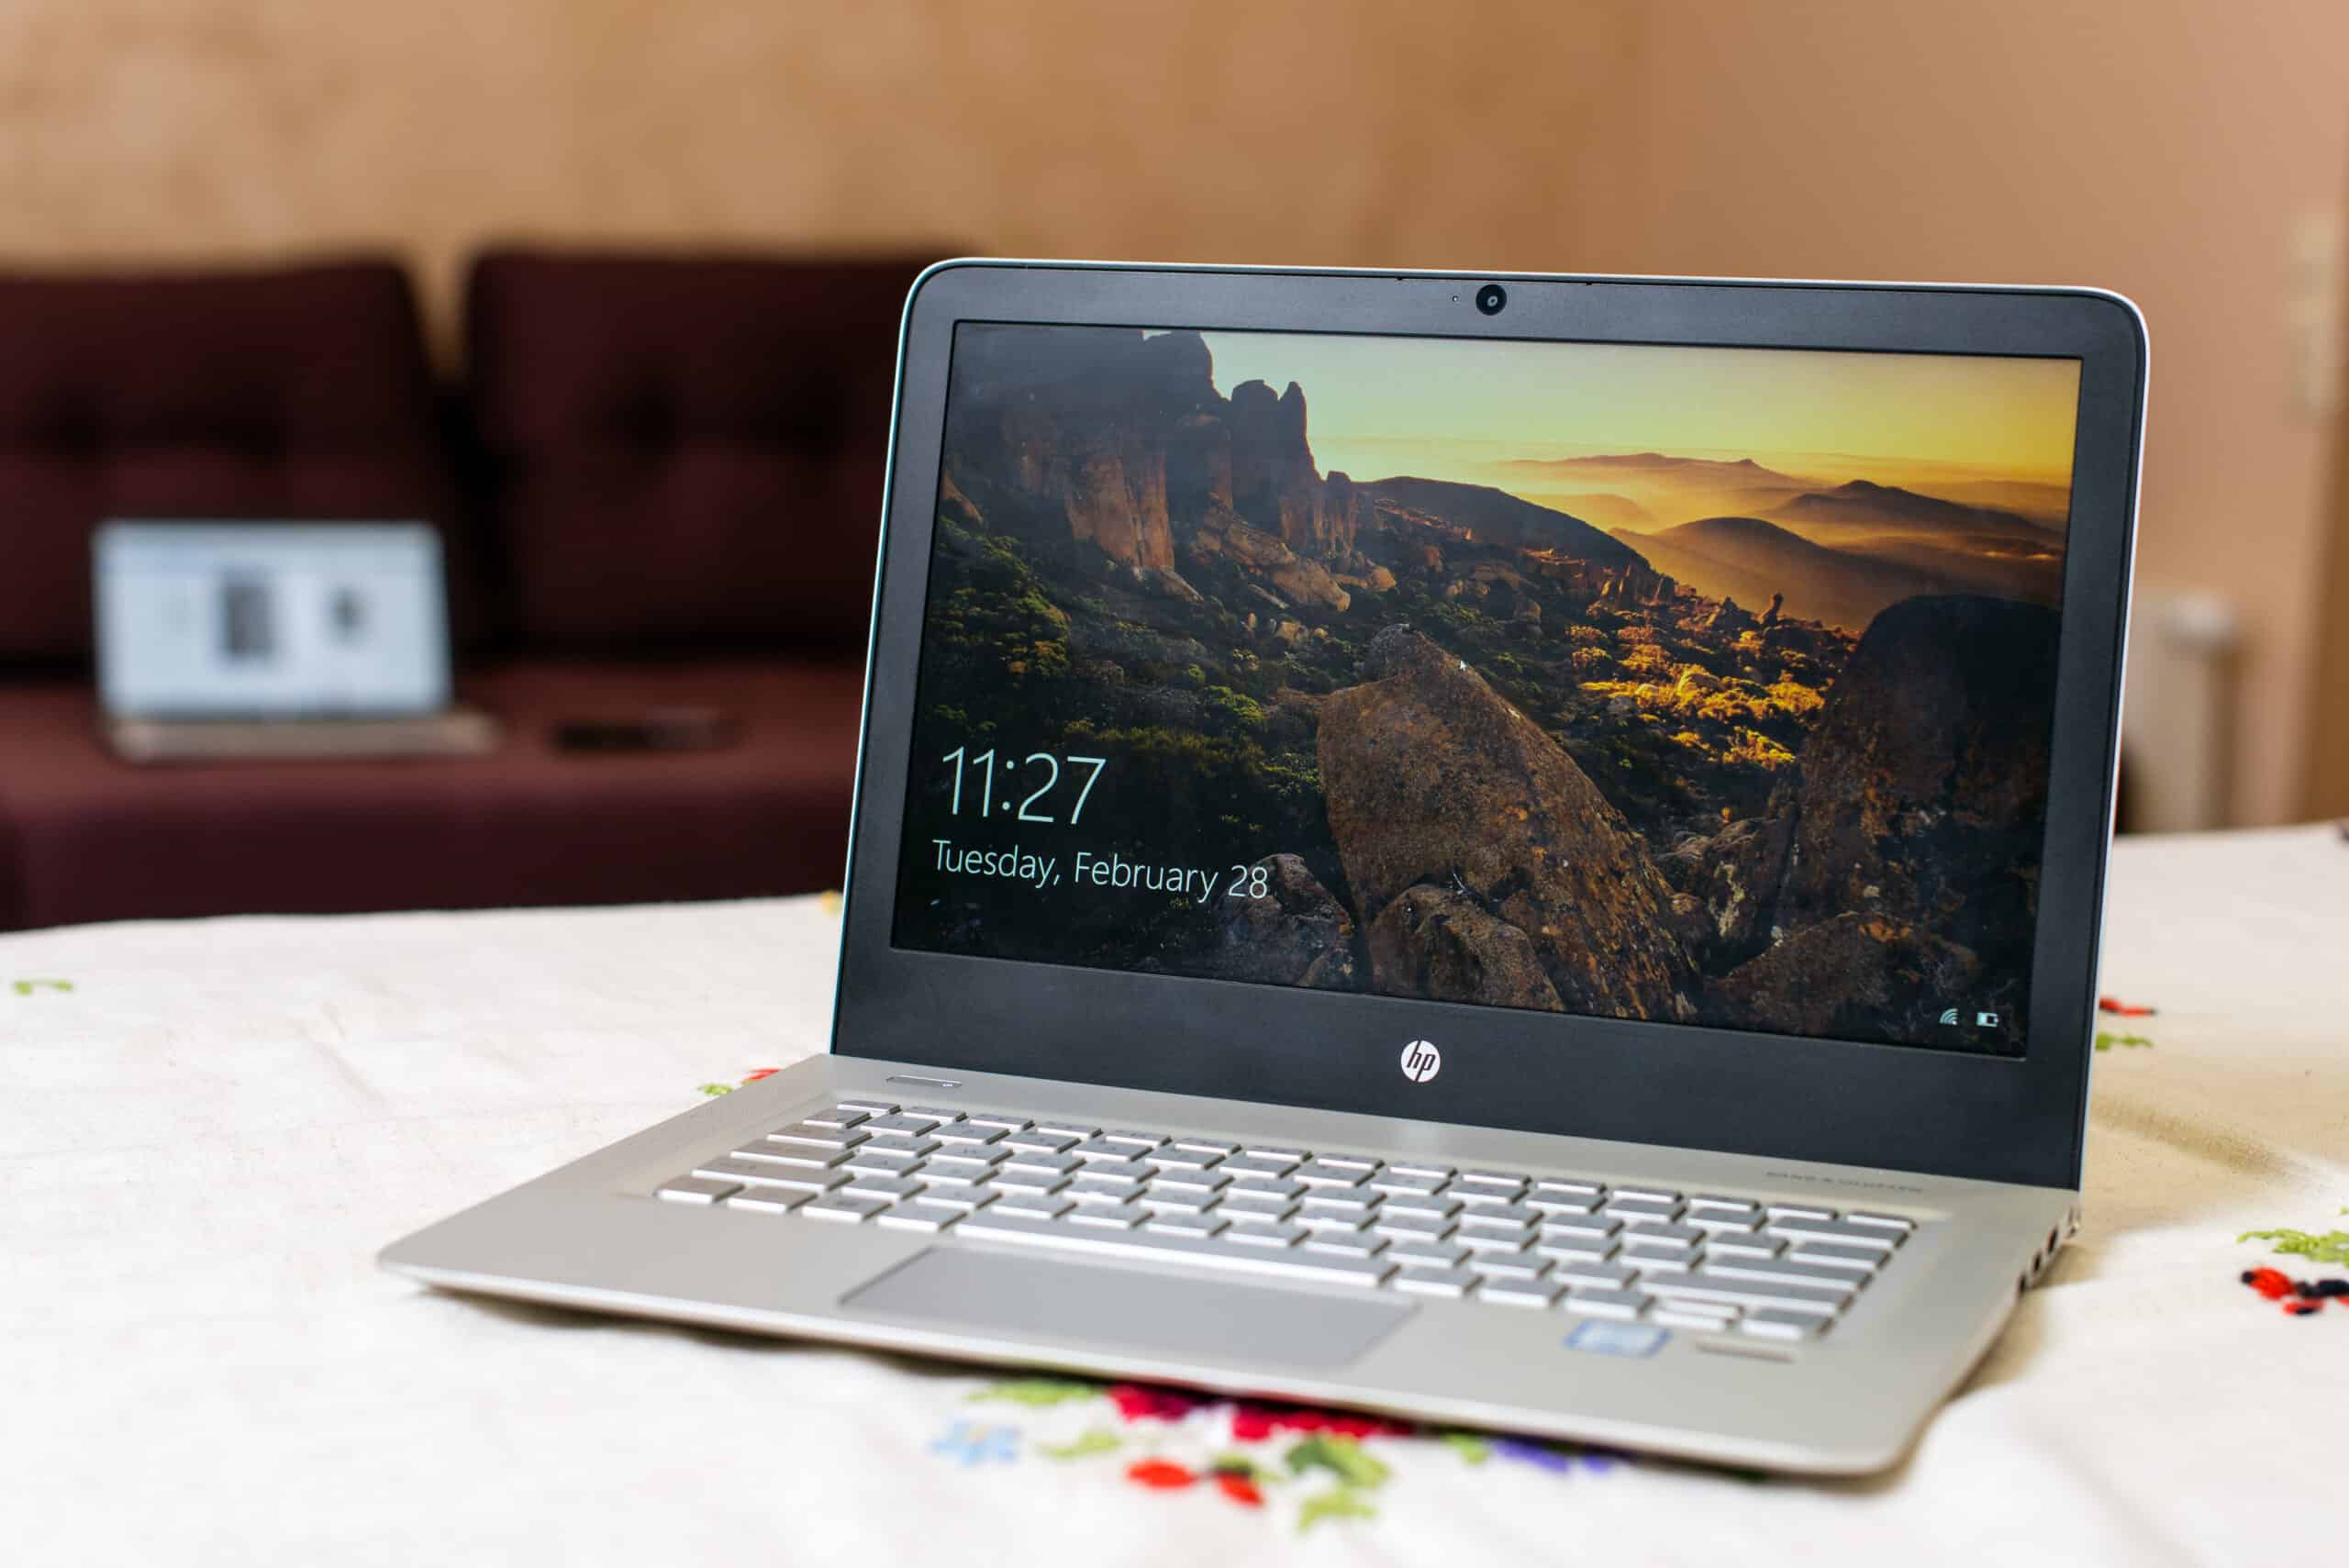 Buy renewed HP laptop